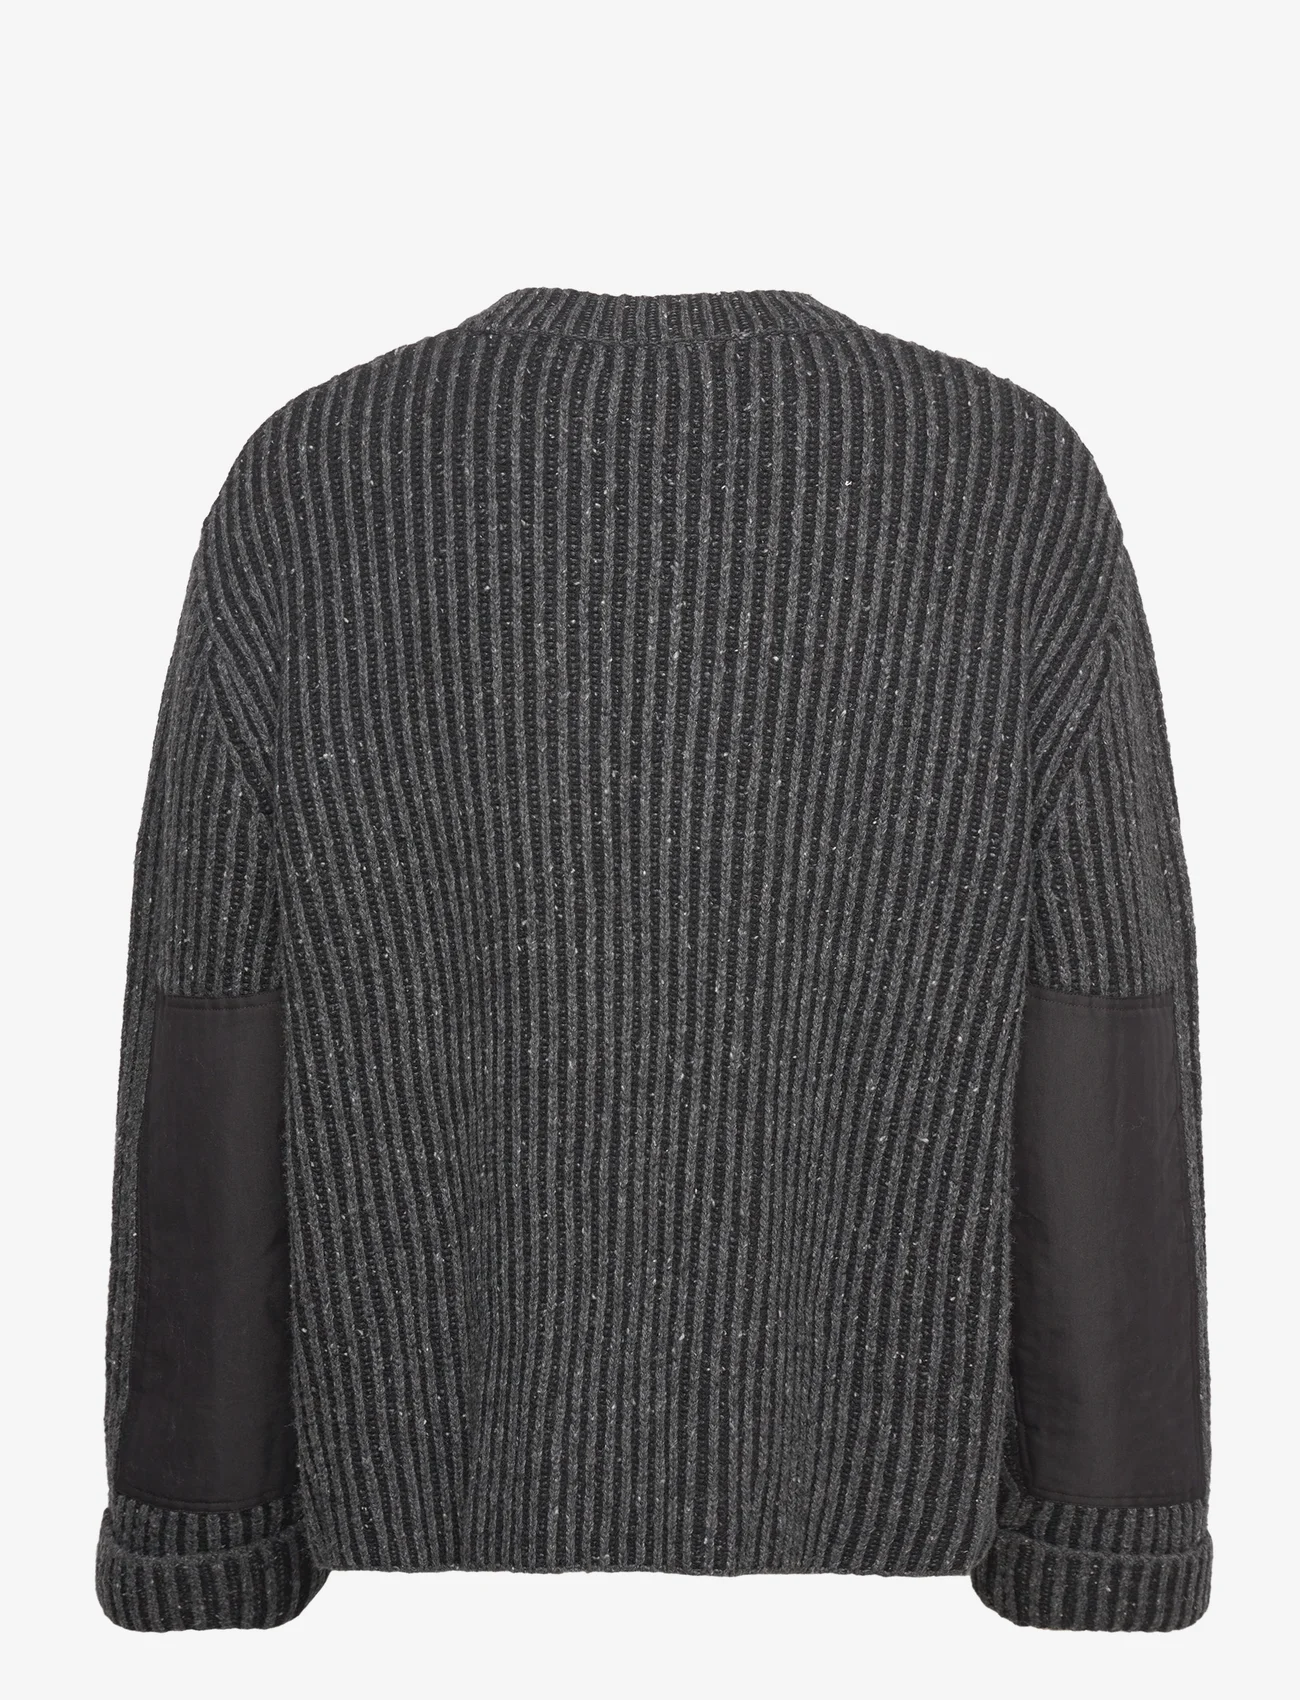 Hope - Heavy Rib-knit Sweater - rund hals - black/grey - 1